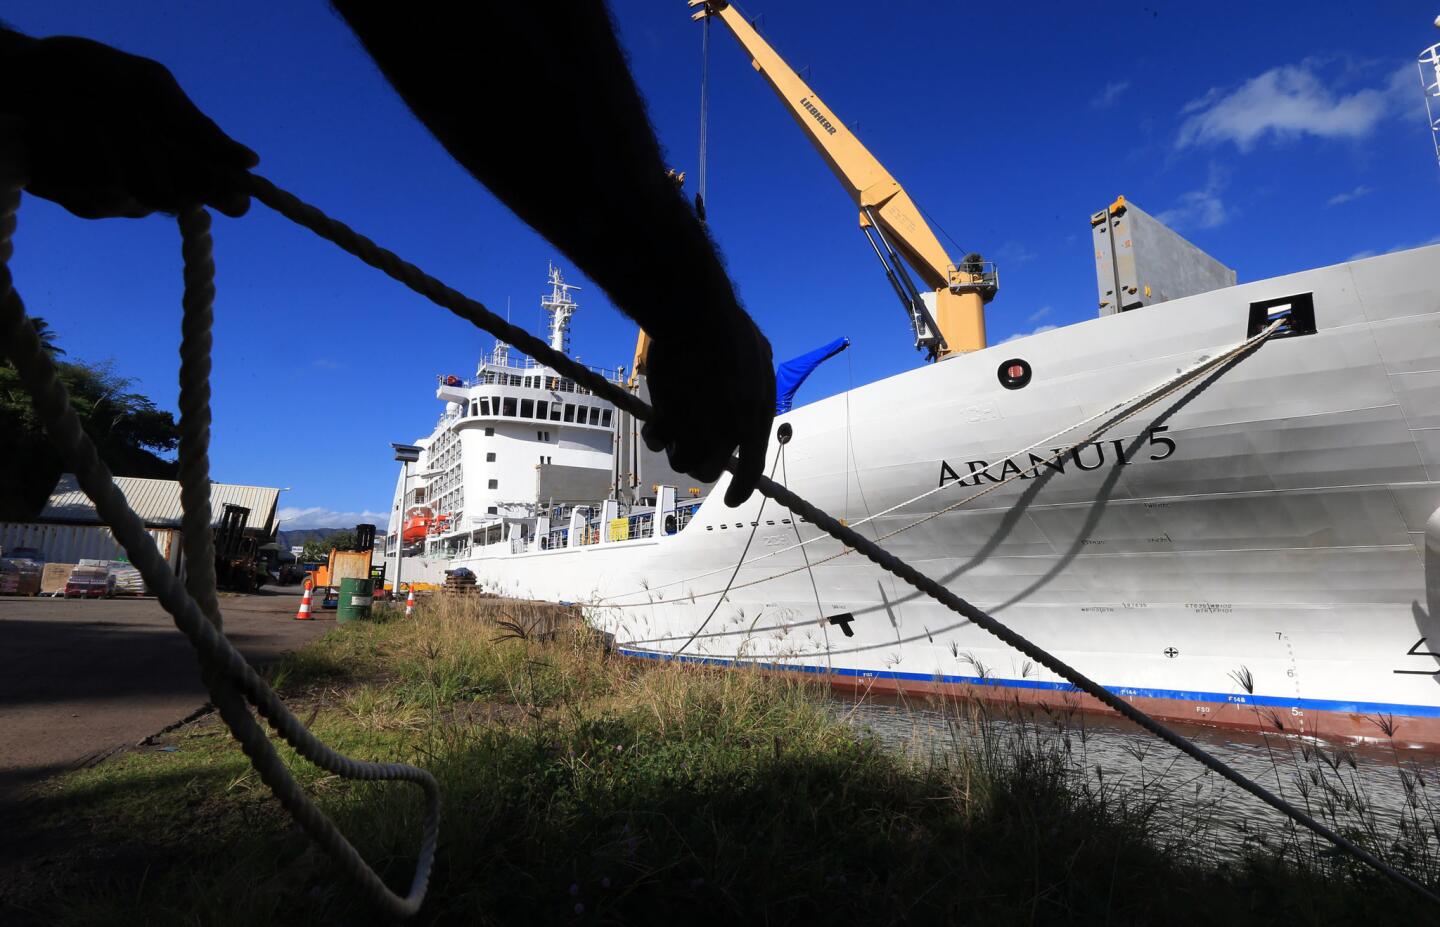 A crewman pulls a line on Hiva Oa, one of the Marquesas Islands. The Aranui 5 is a half cargo, half cruise ship.